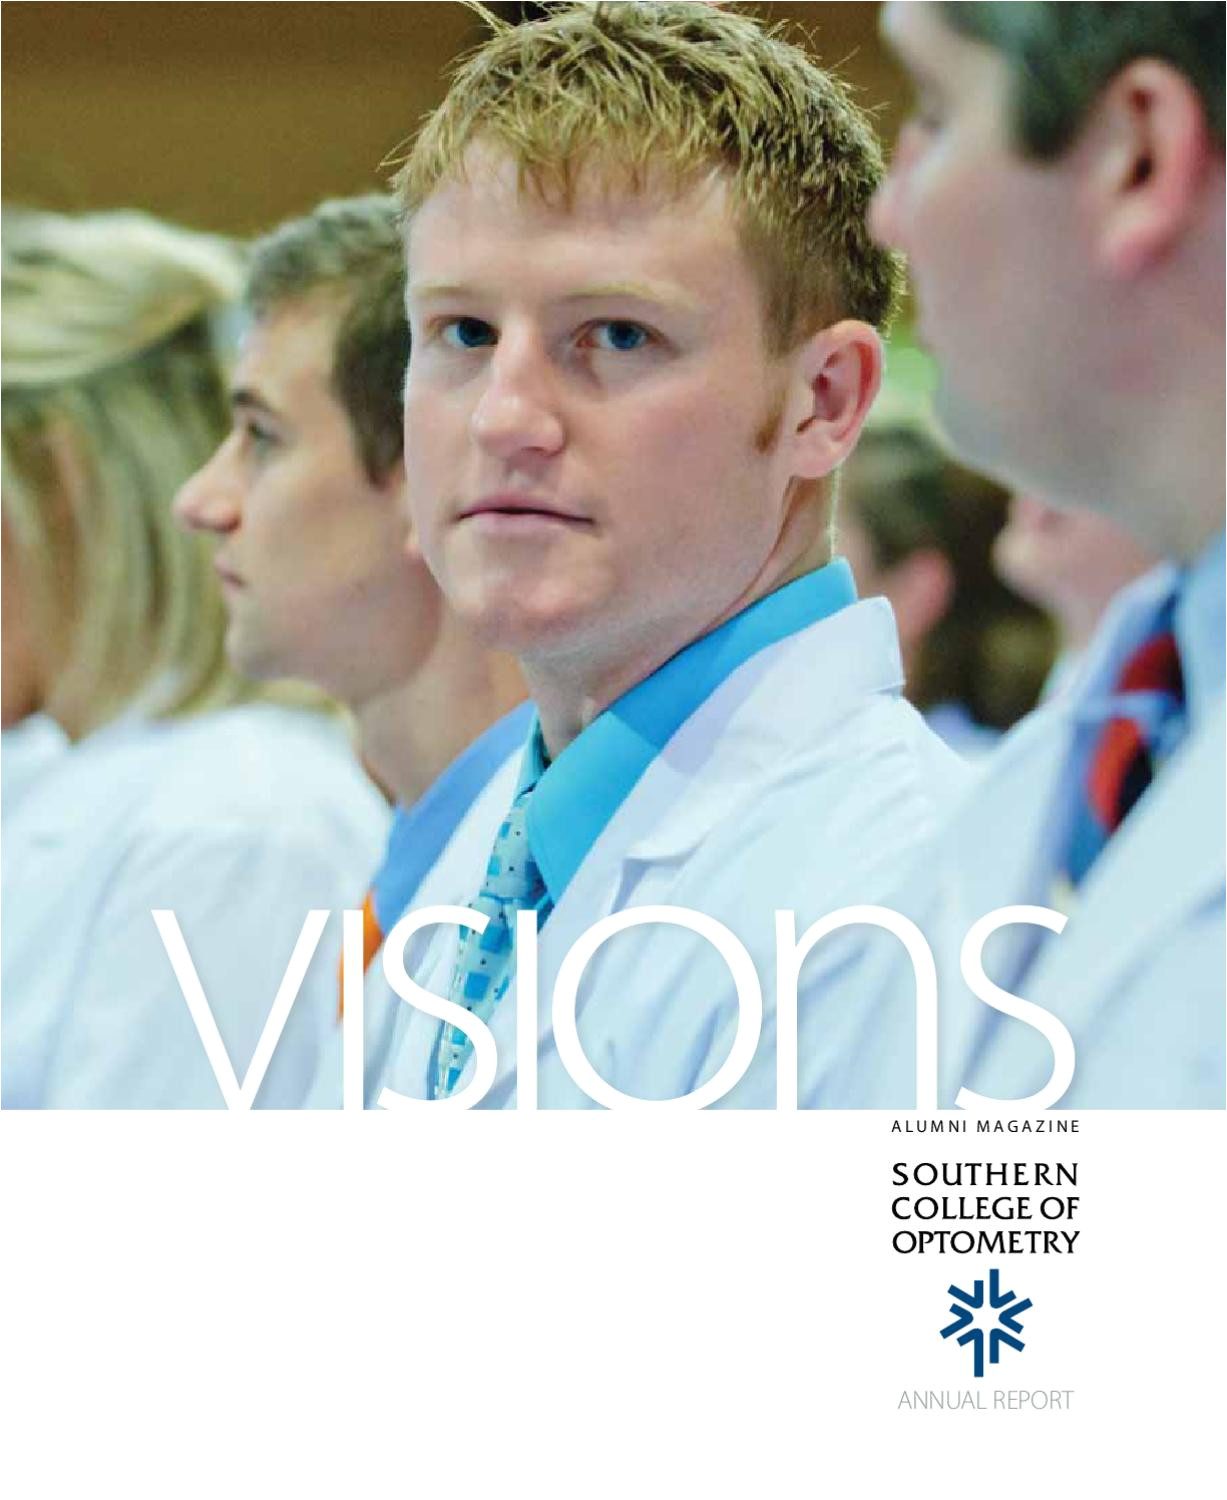 visions alumni magazine annual report 2011 southern college of optometry by southern college of optometry issuu